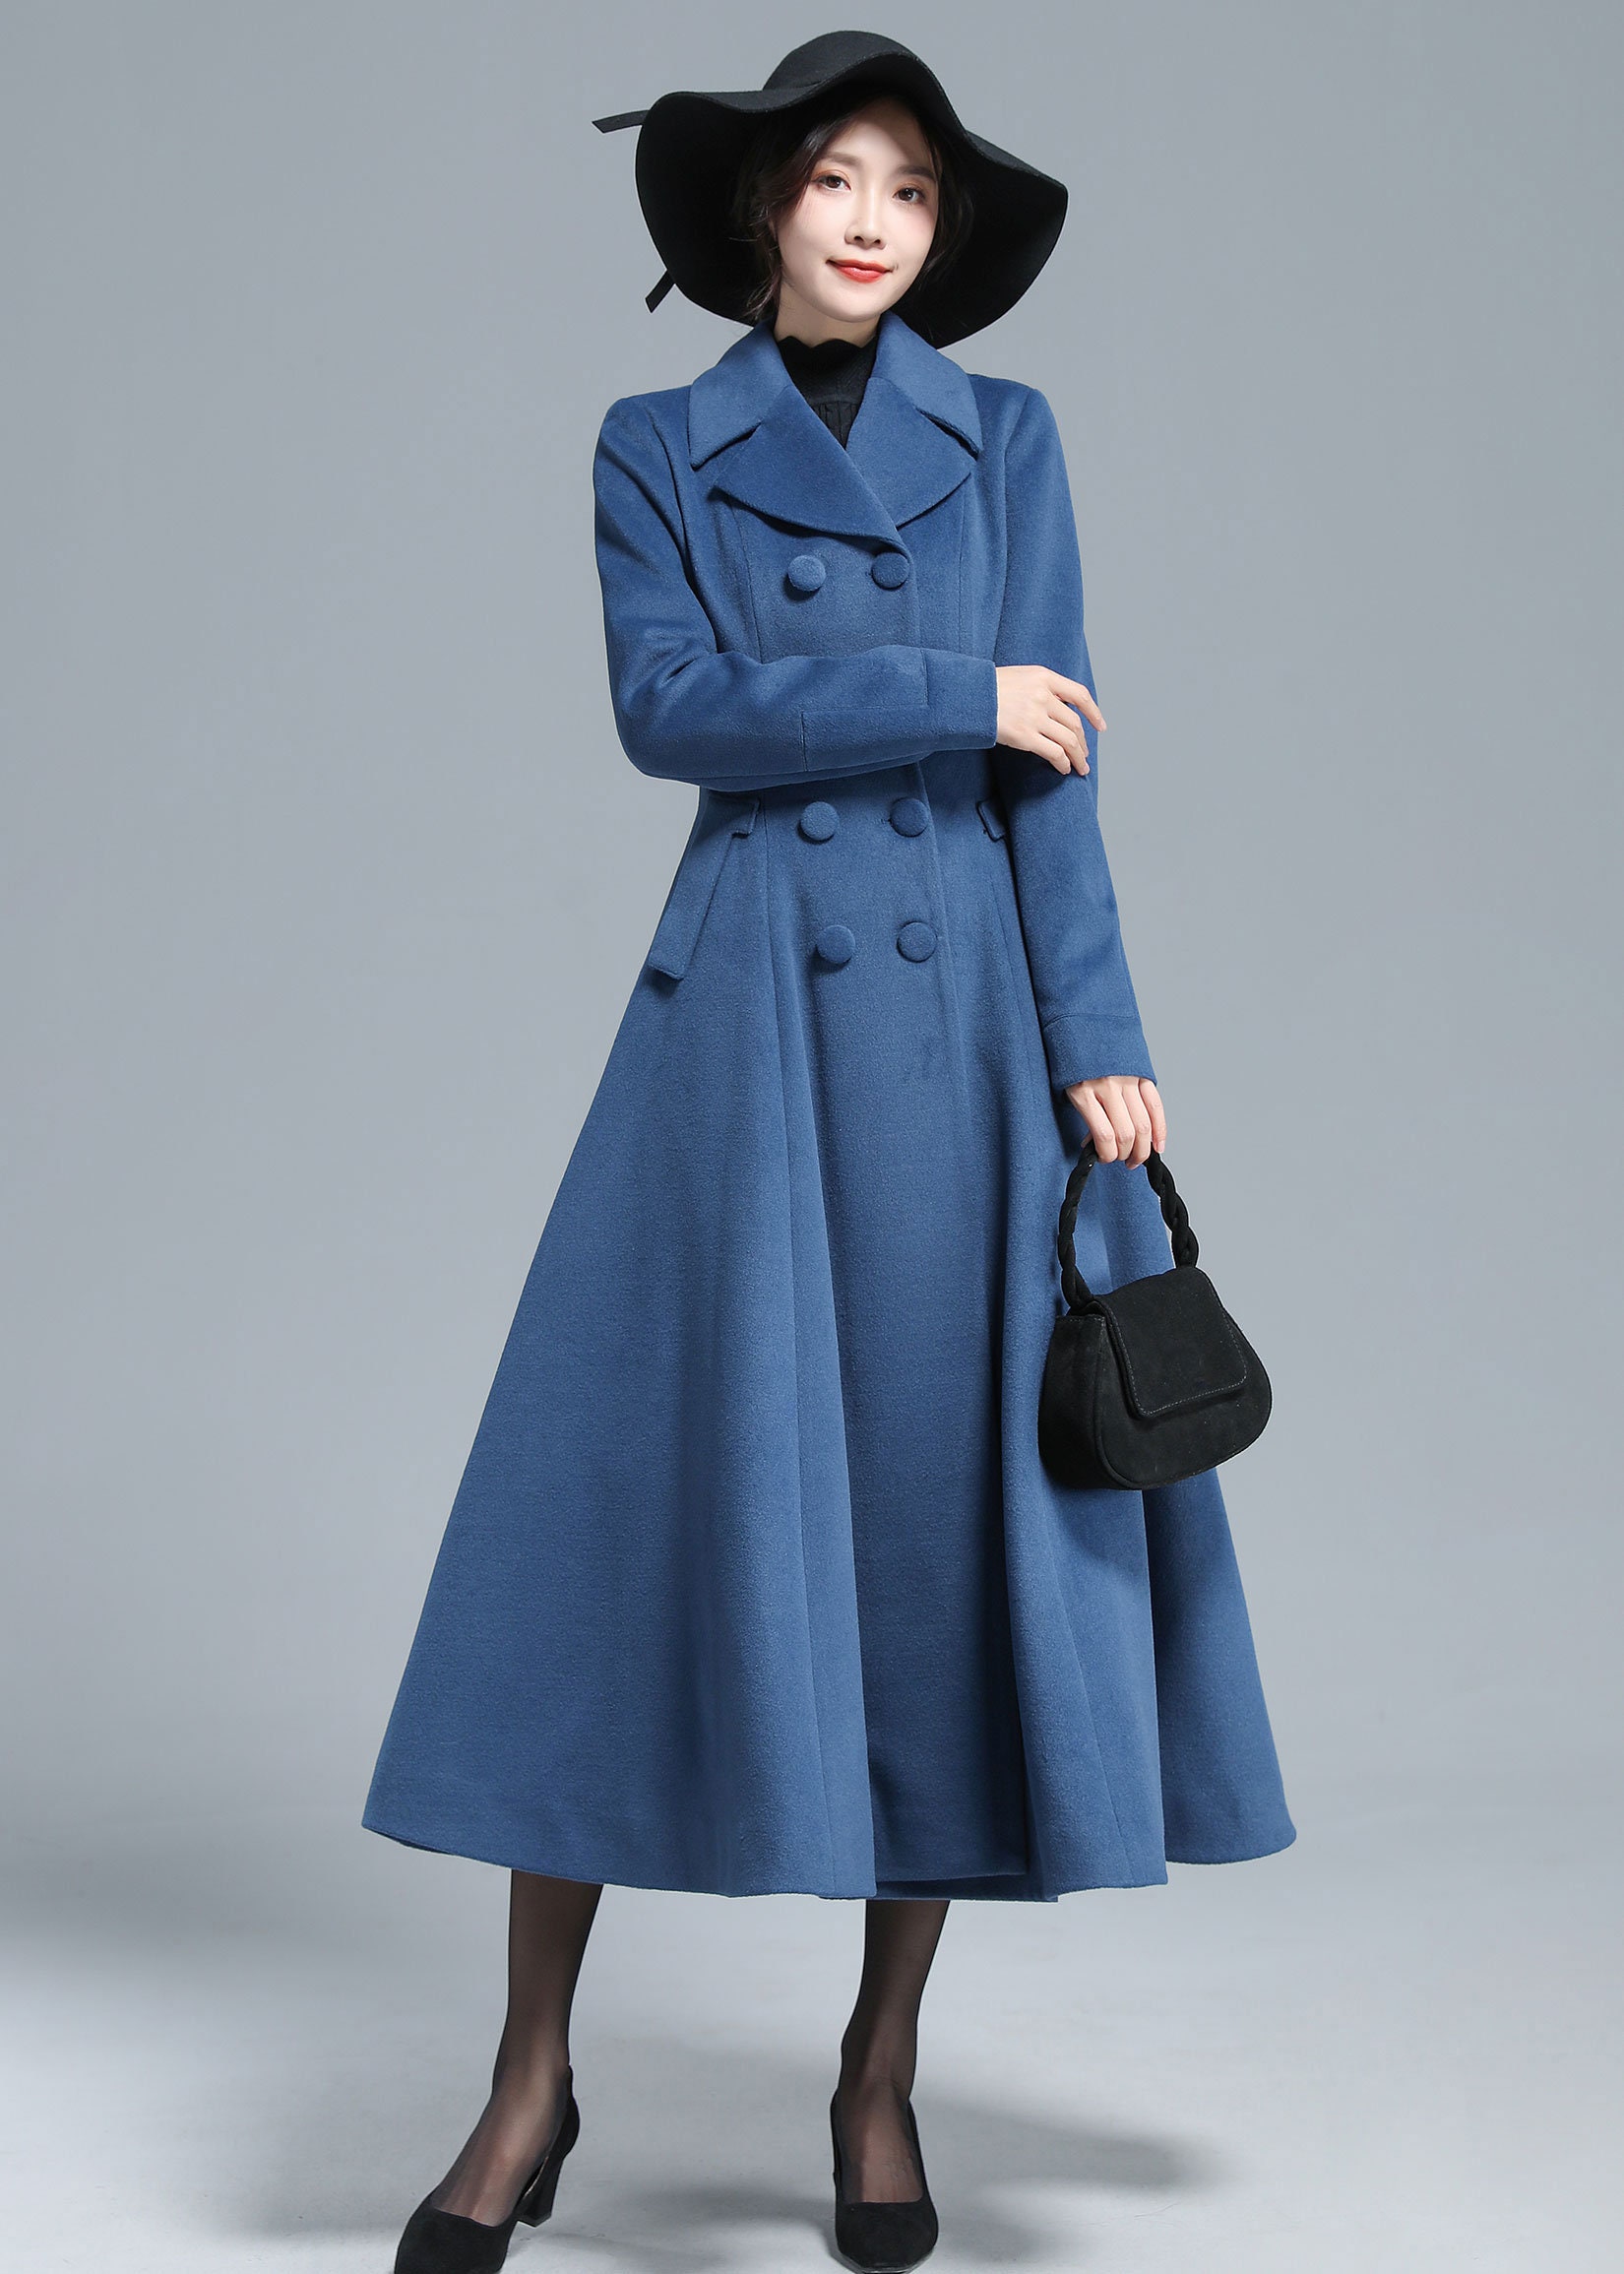 Aardbei conjunctie Indica Vintage Inspired Long Wool Princess Coat Women Fit and Flare - Etsy